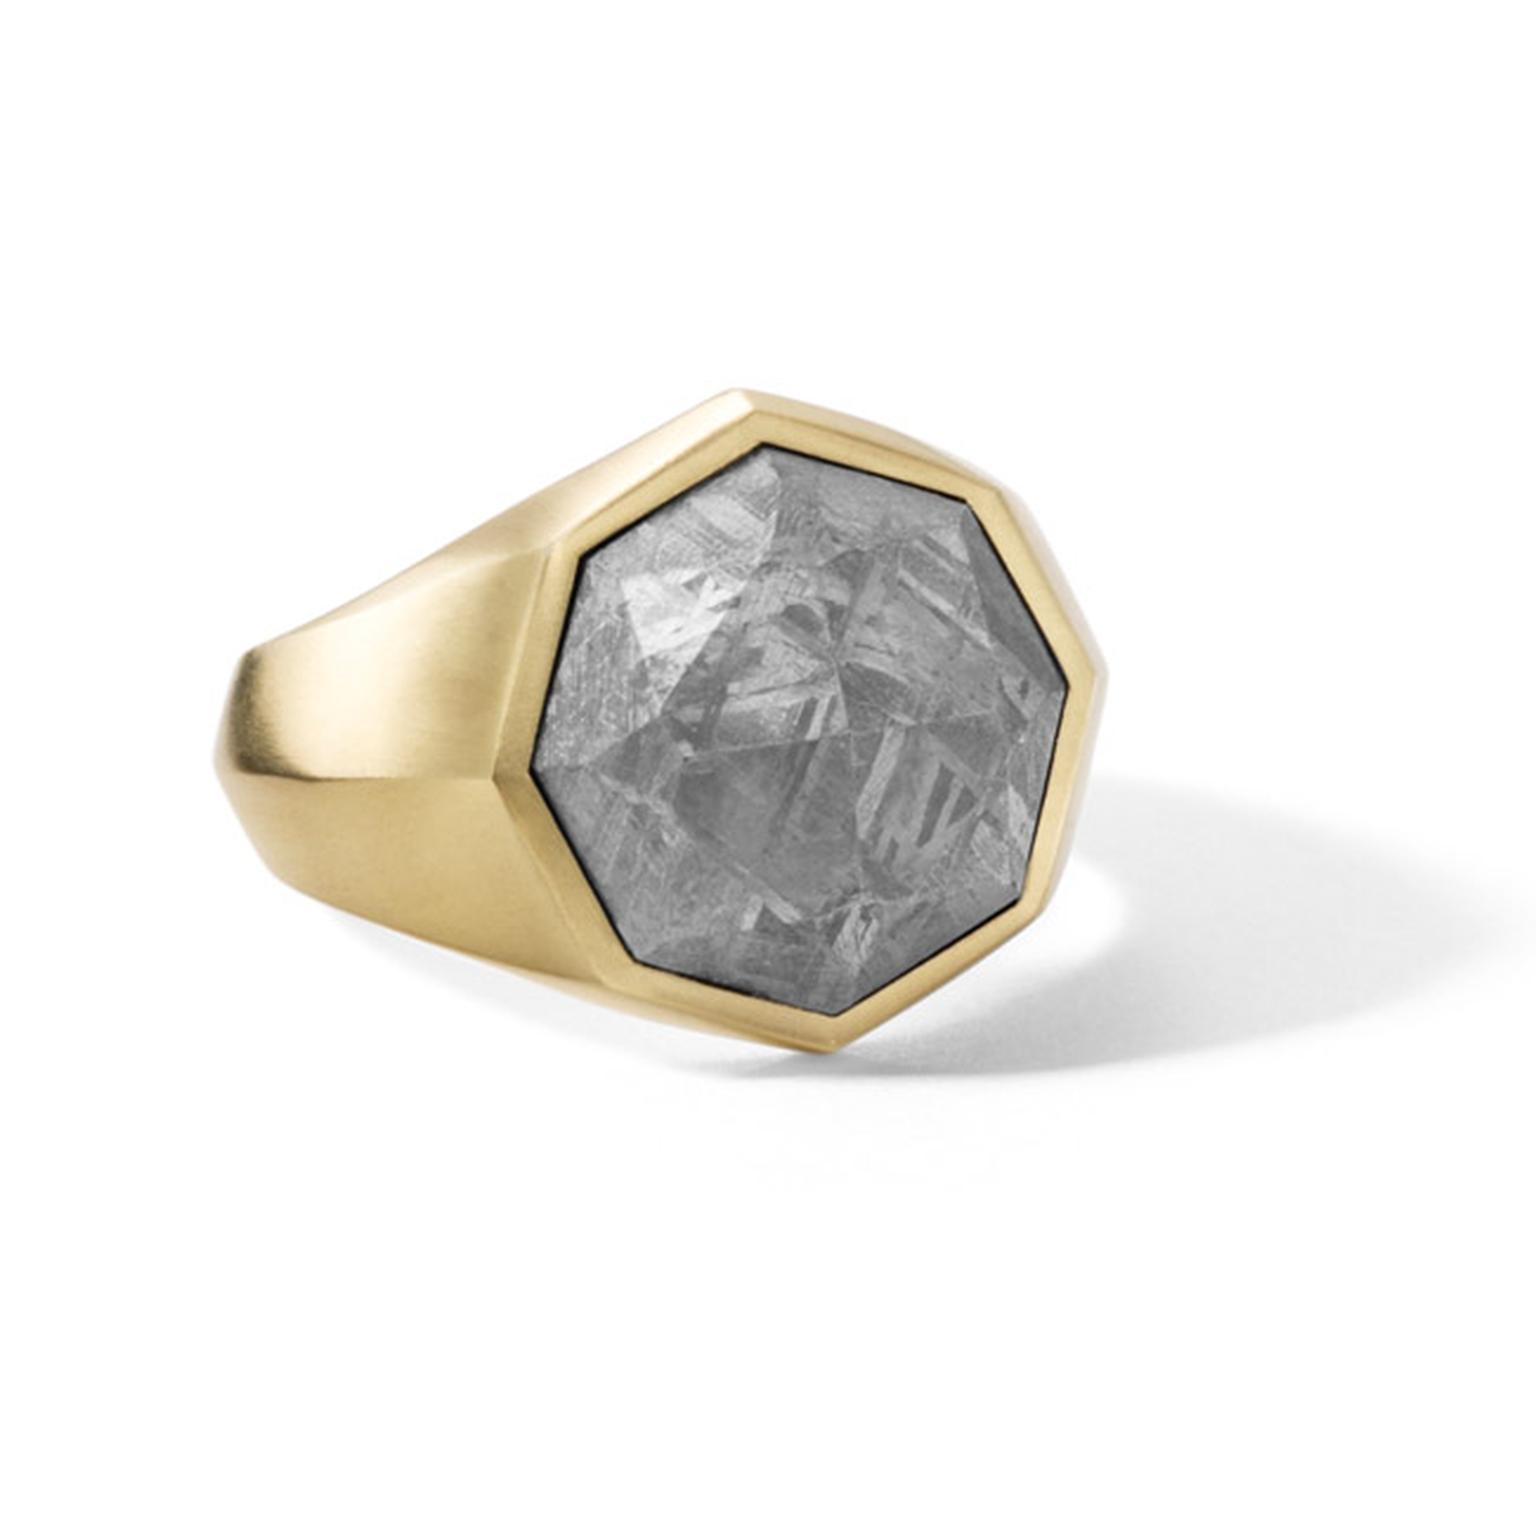 David-Yurman-Meteorite-ring-main